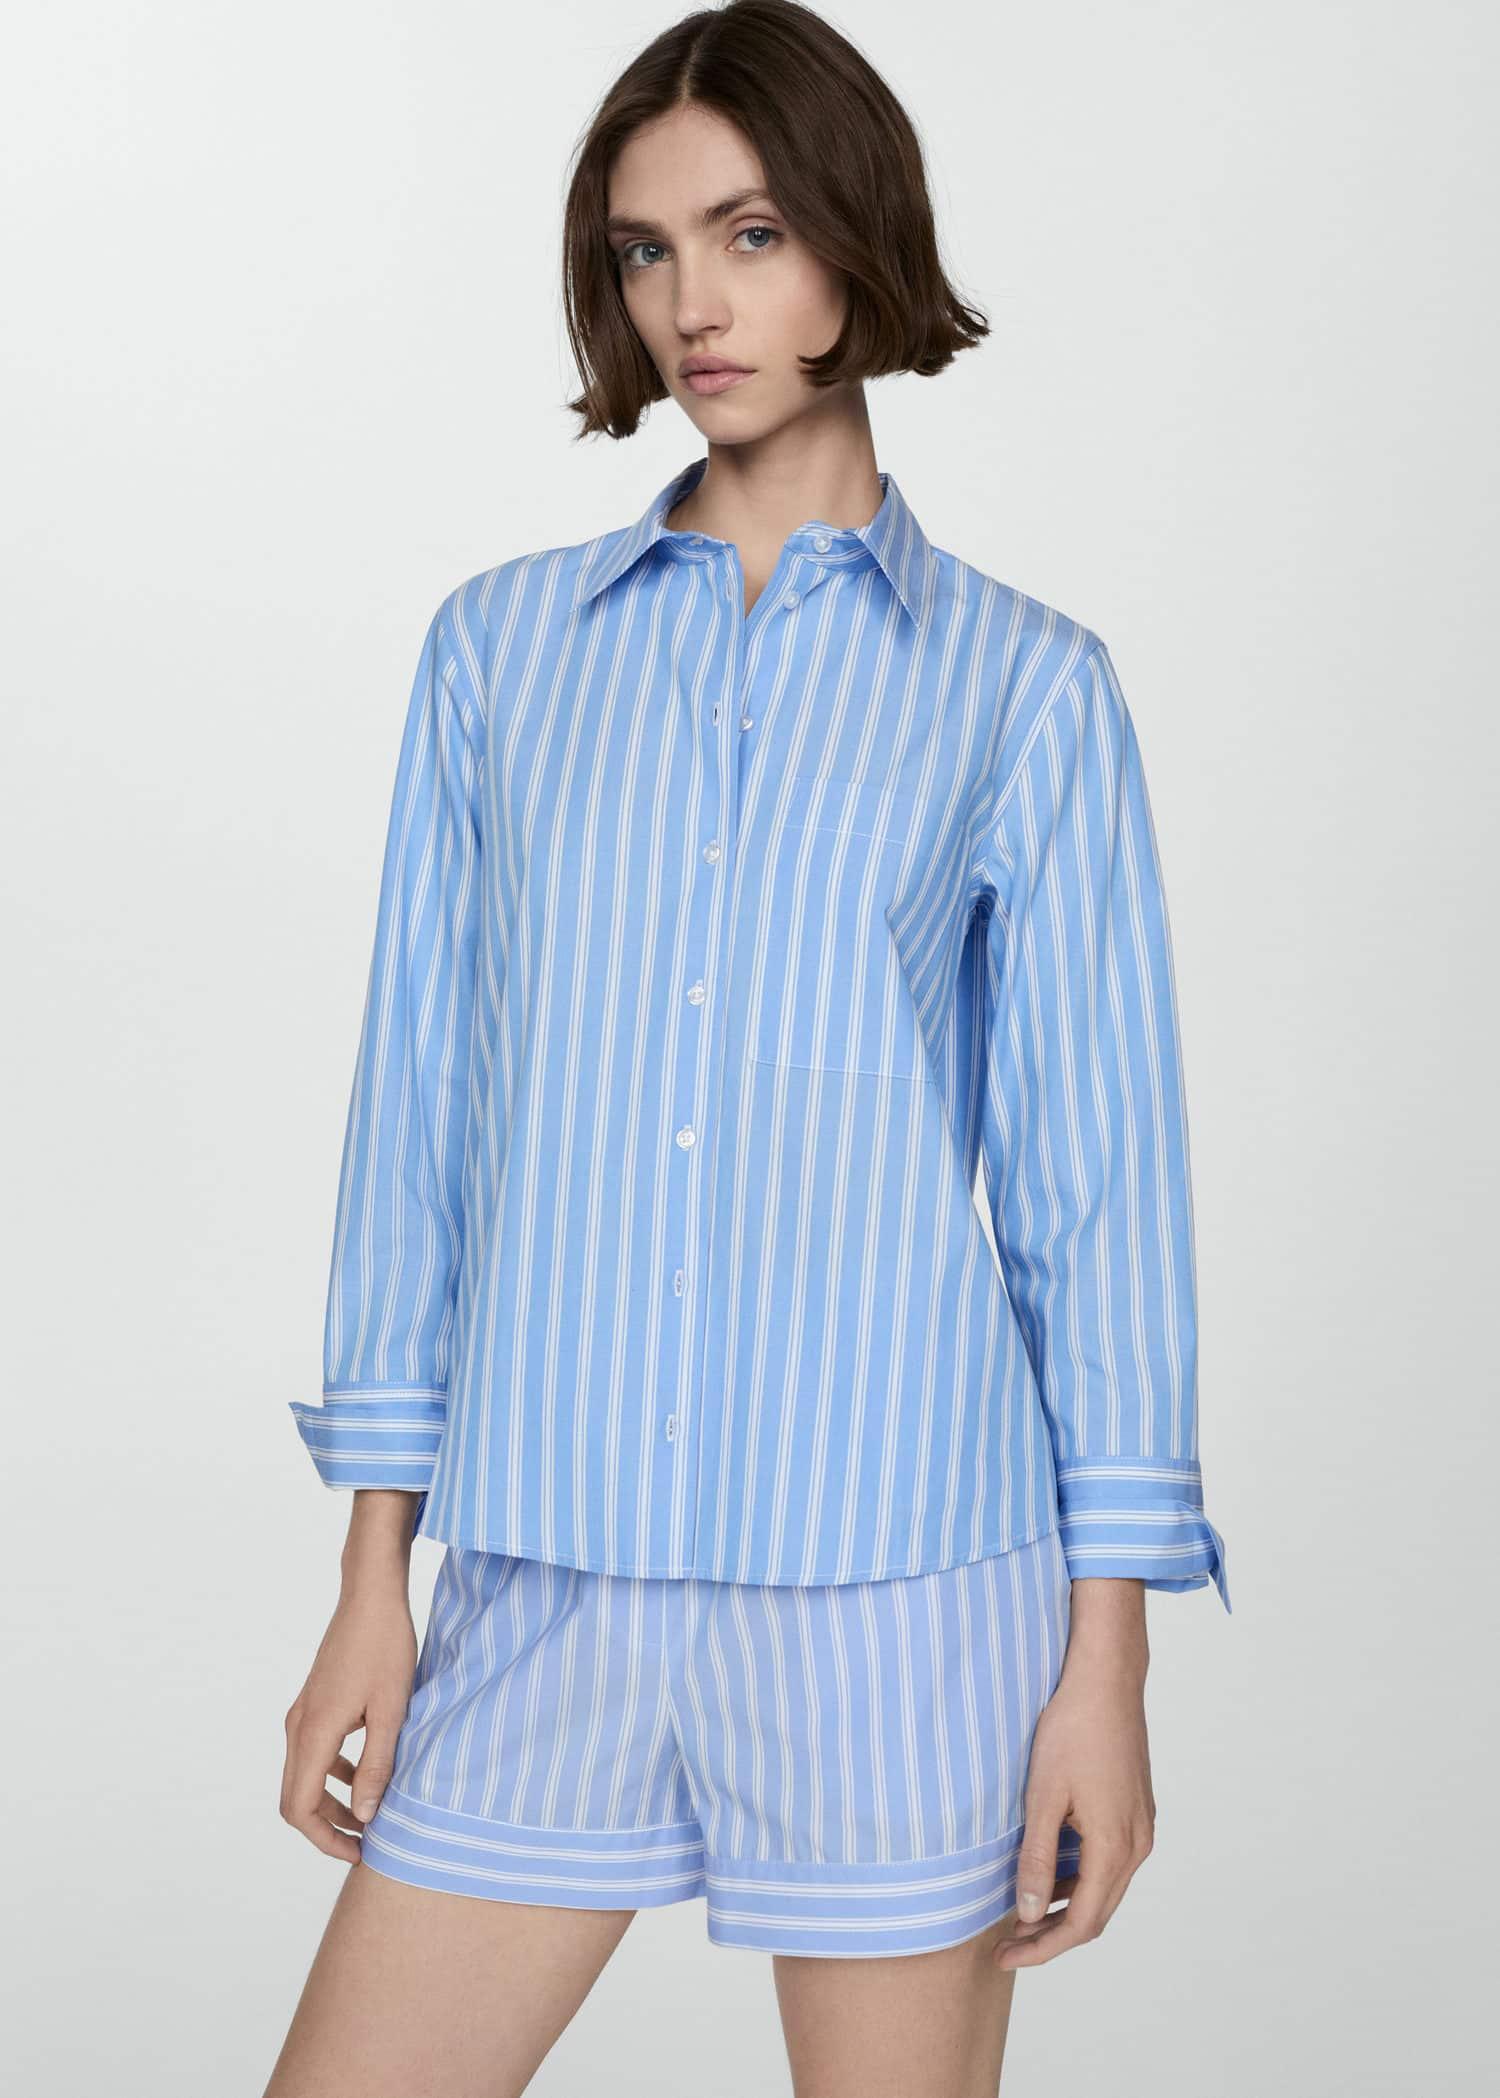 100% cotton striped shirt